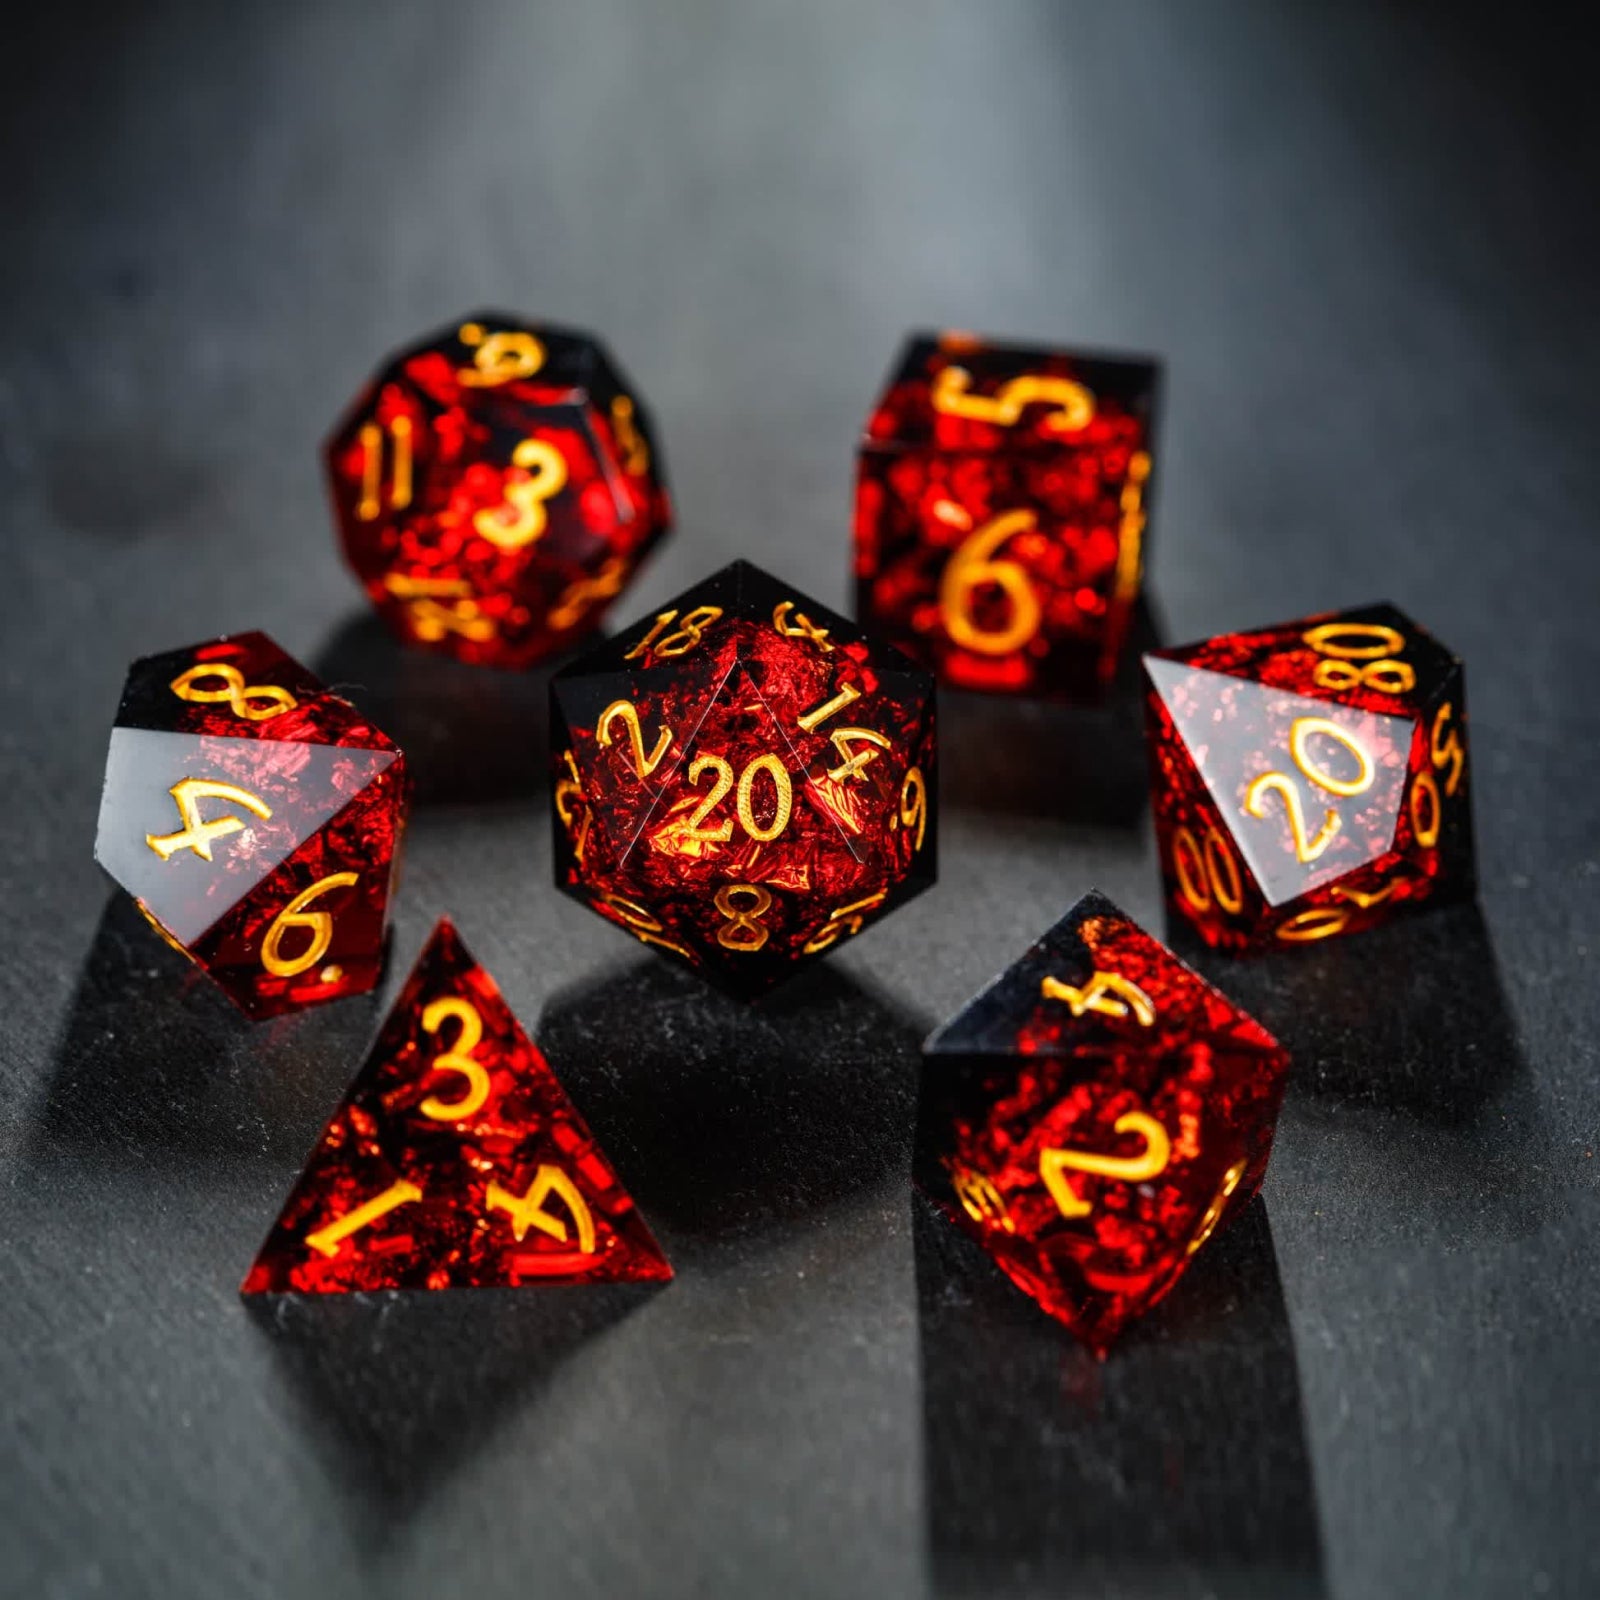 Unique black and red gaming dice